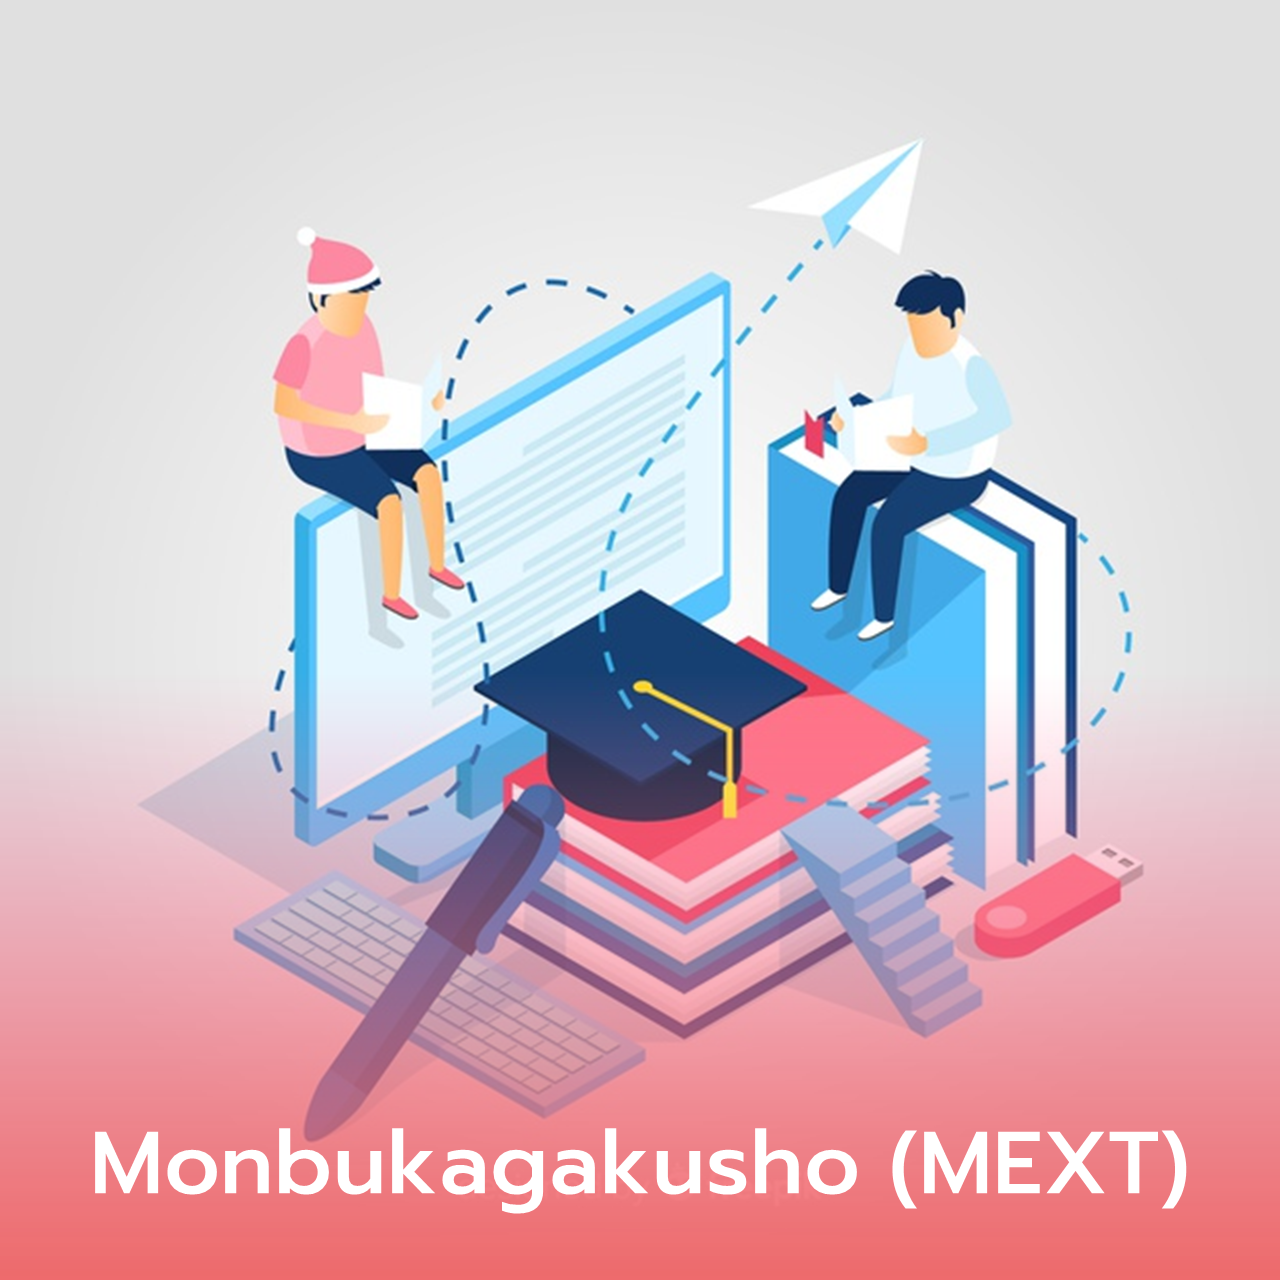  Monbukagakusho (MEXT) ทุนรัฐบาลญี่ปุ่น